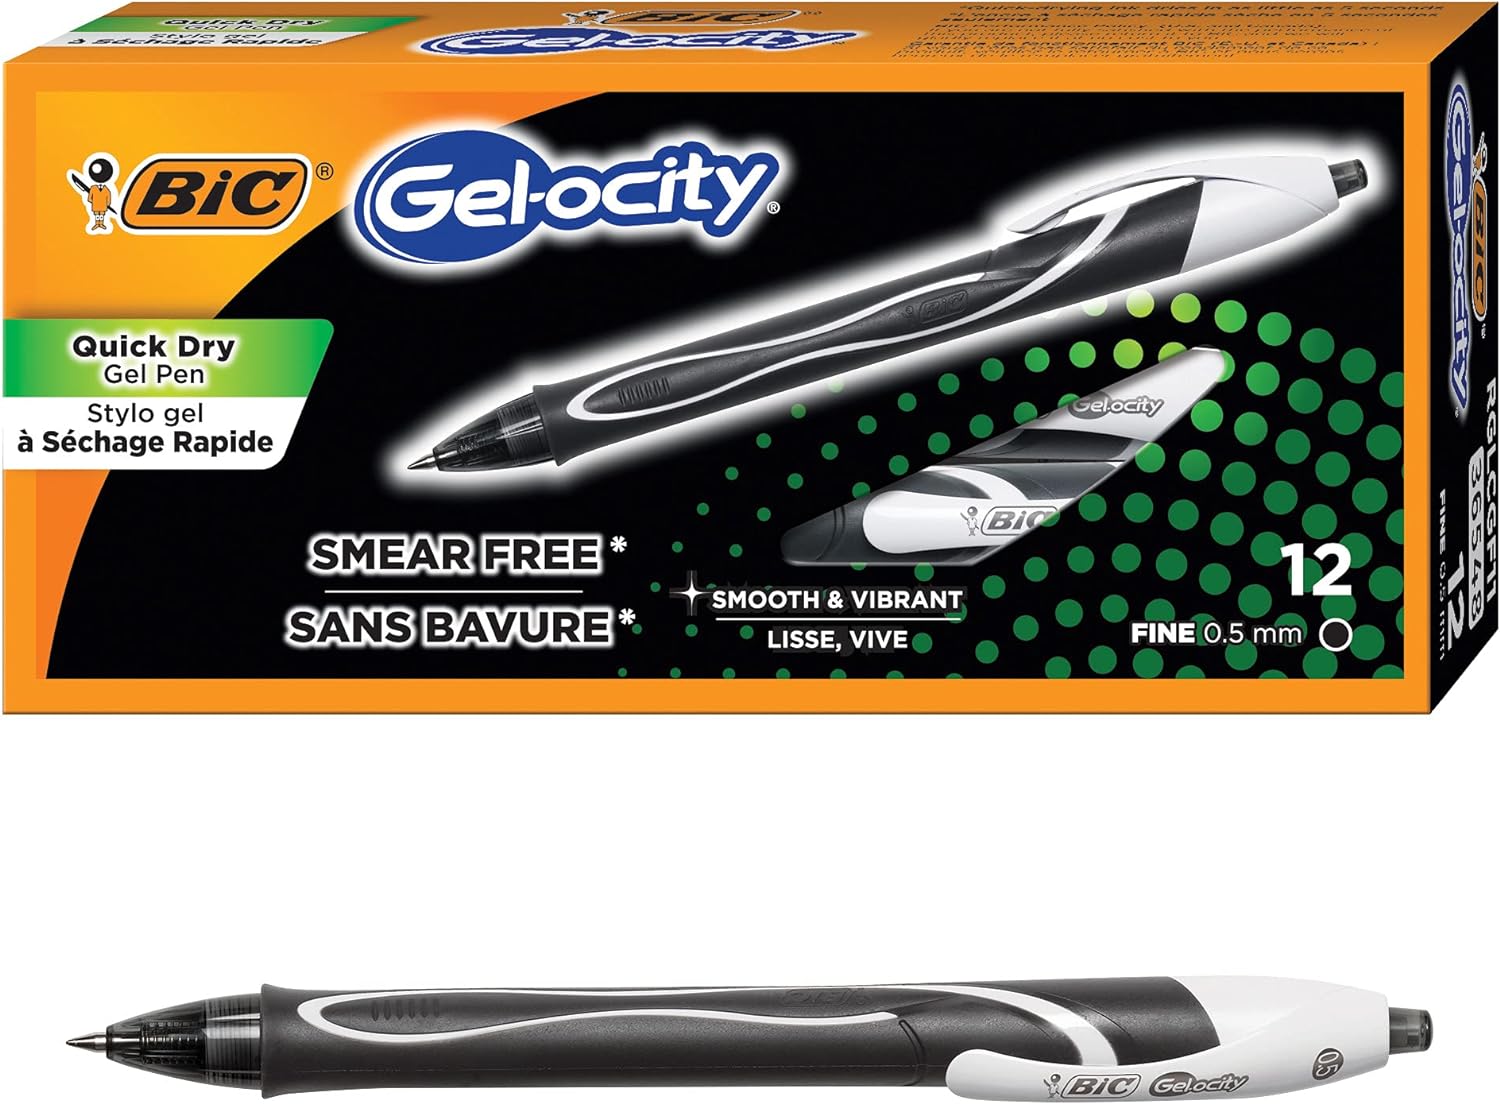 BIC Gel-ocity Quick Dry Gel Pen, Fine Point (0.5mm) - Box of 12 Black Gel Pens